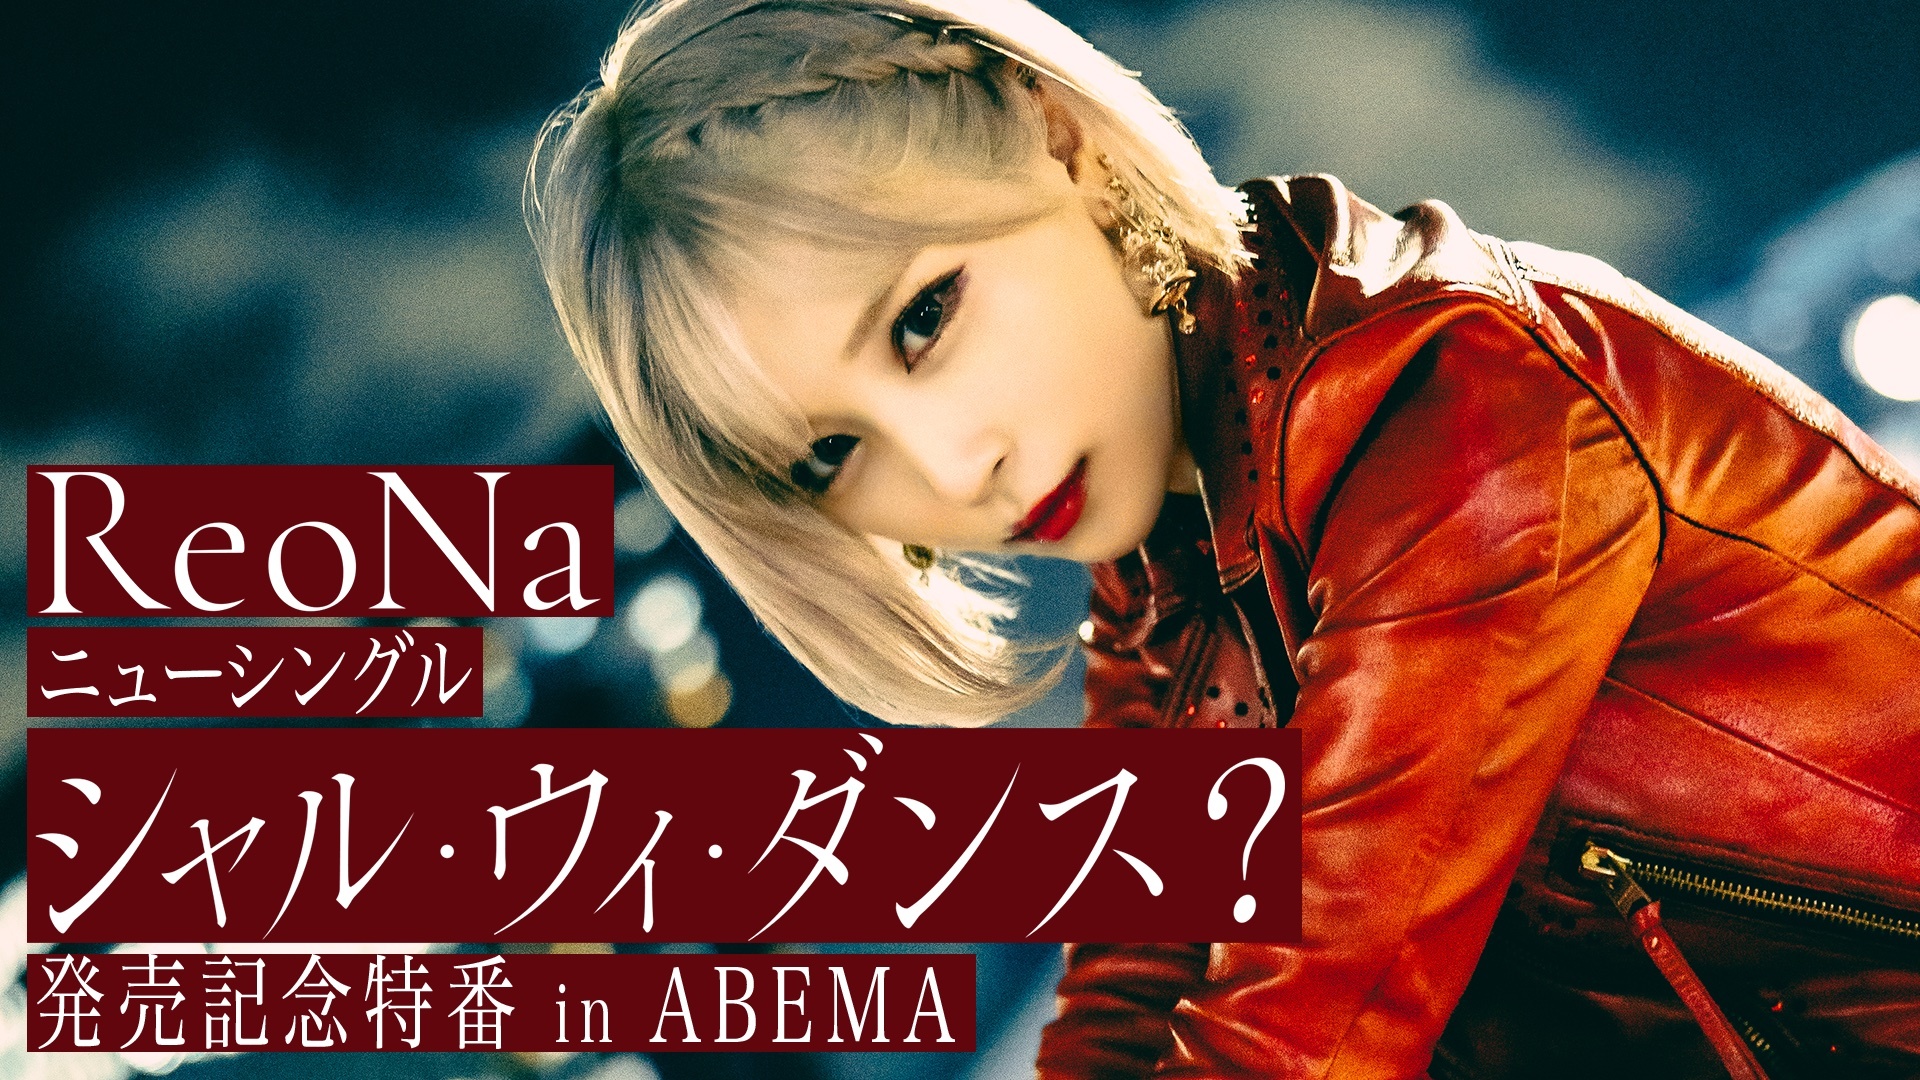 『ReoNaニューシングル「シャル・ウィ・ダンス？」発売記念特番 in ABEMA』